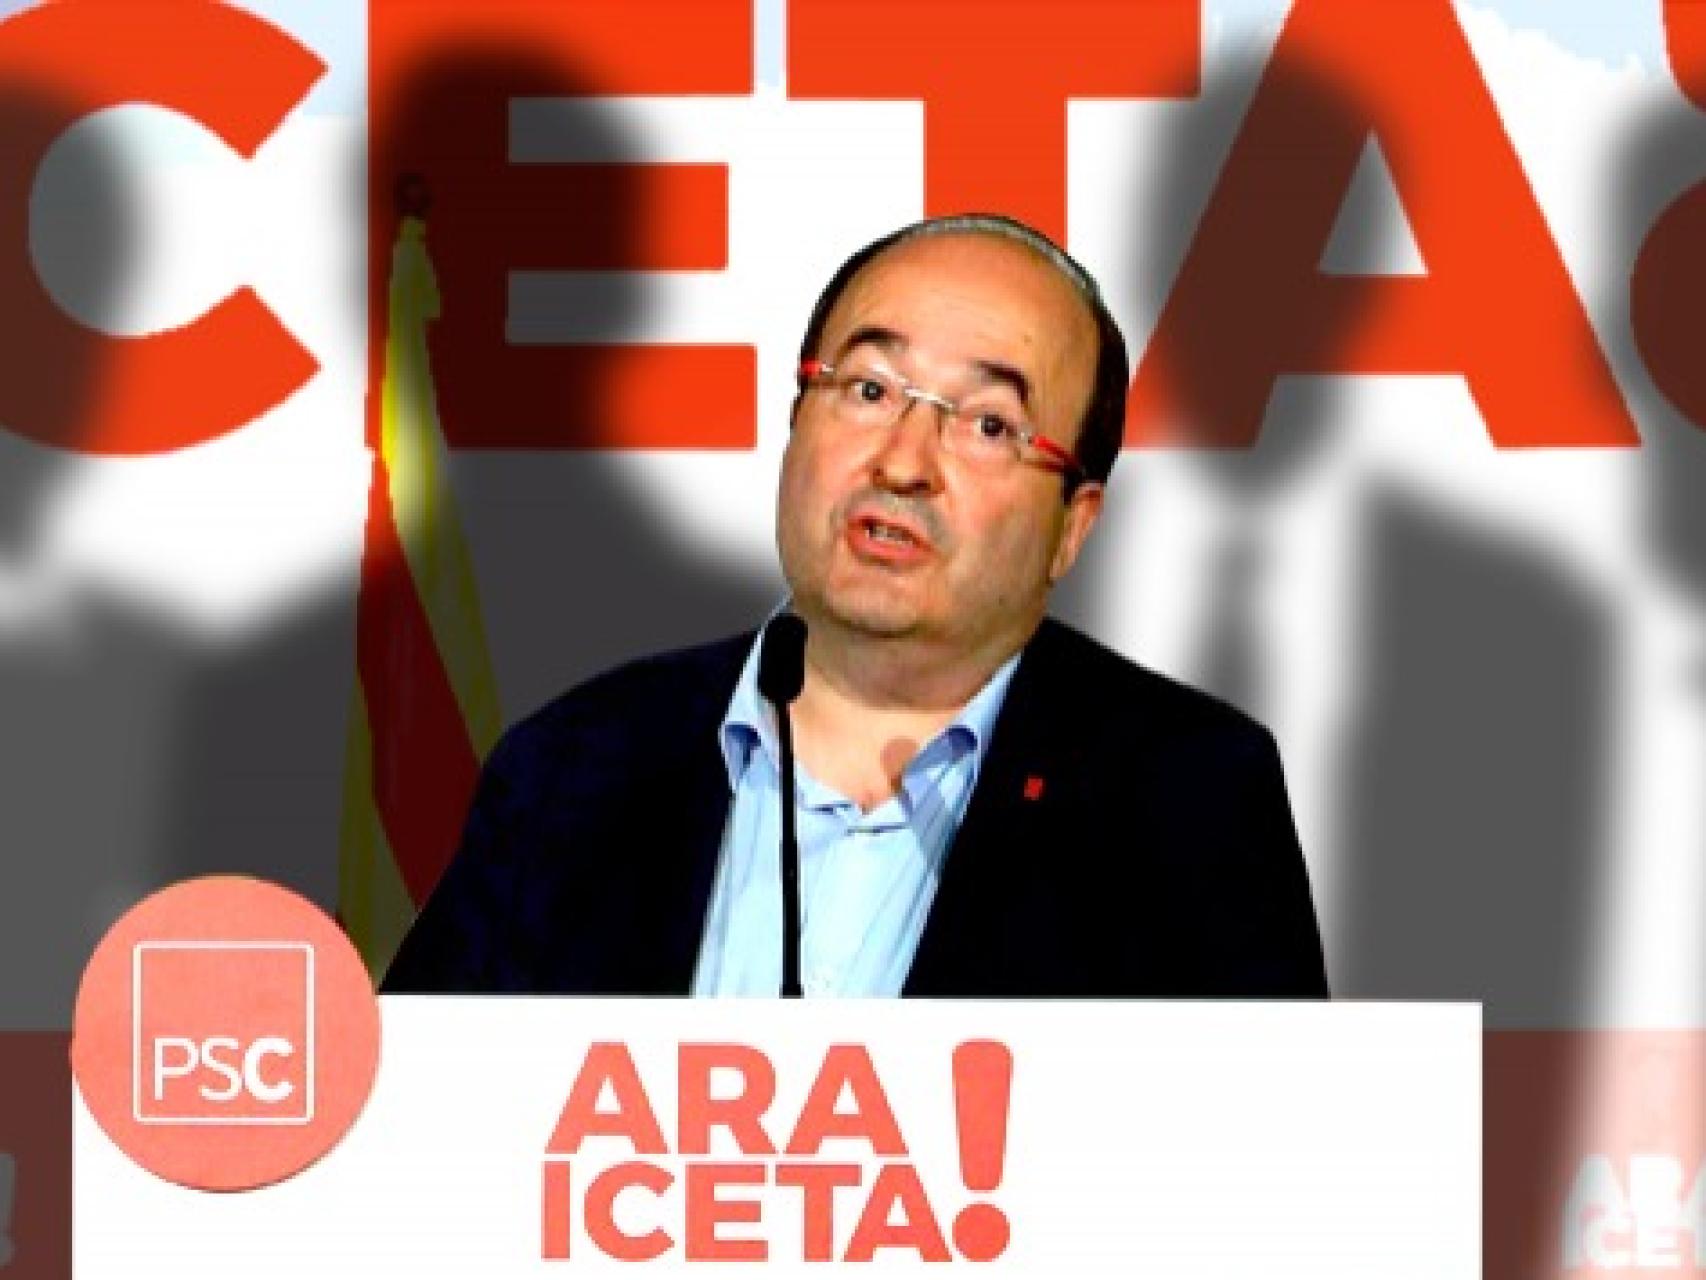 El candidato del PSC, Miquel Iceta.